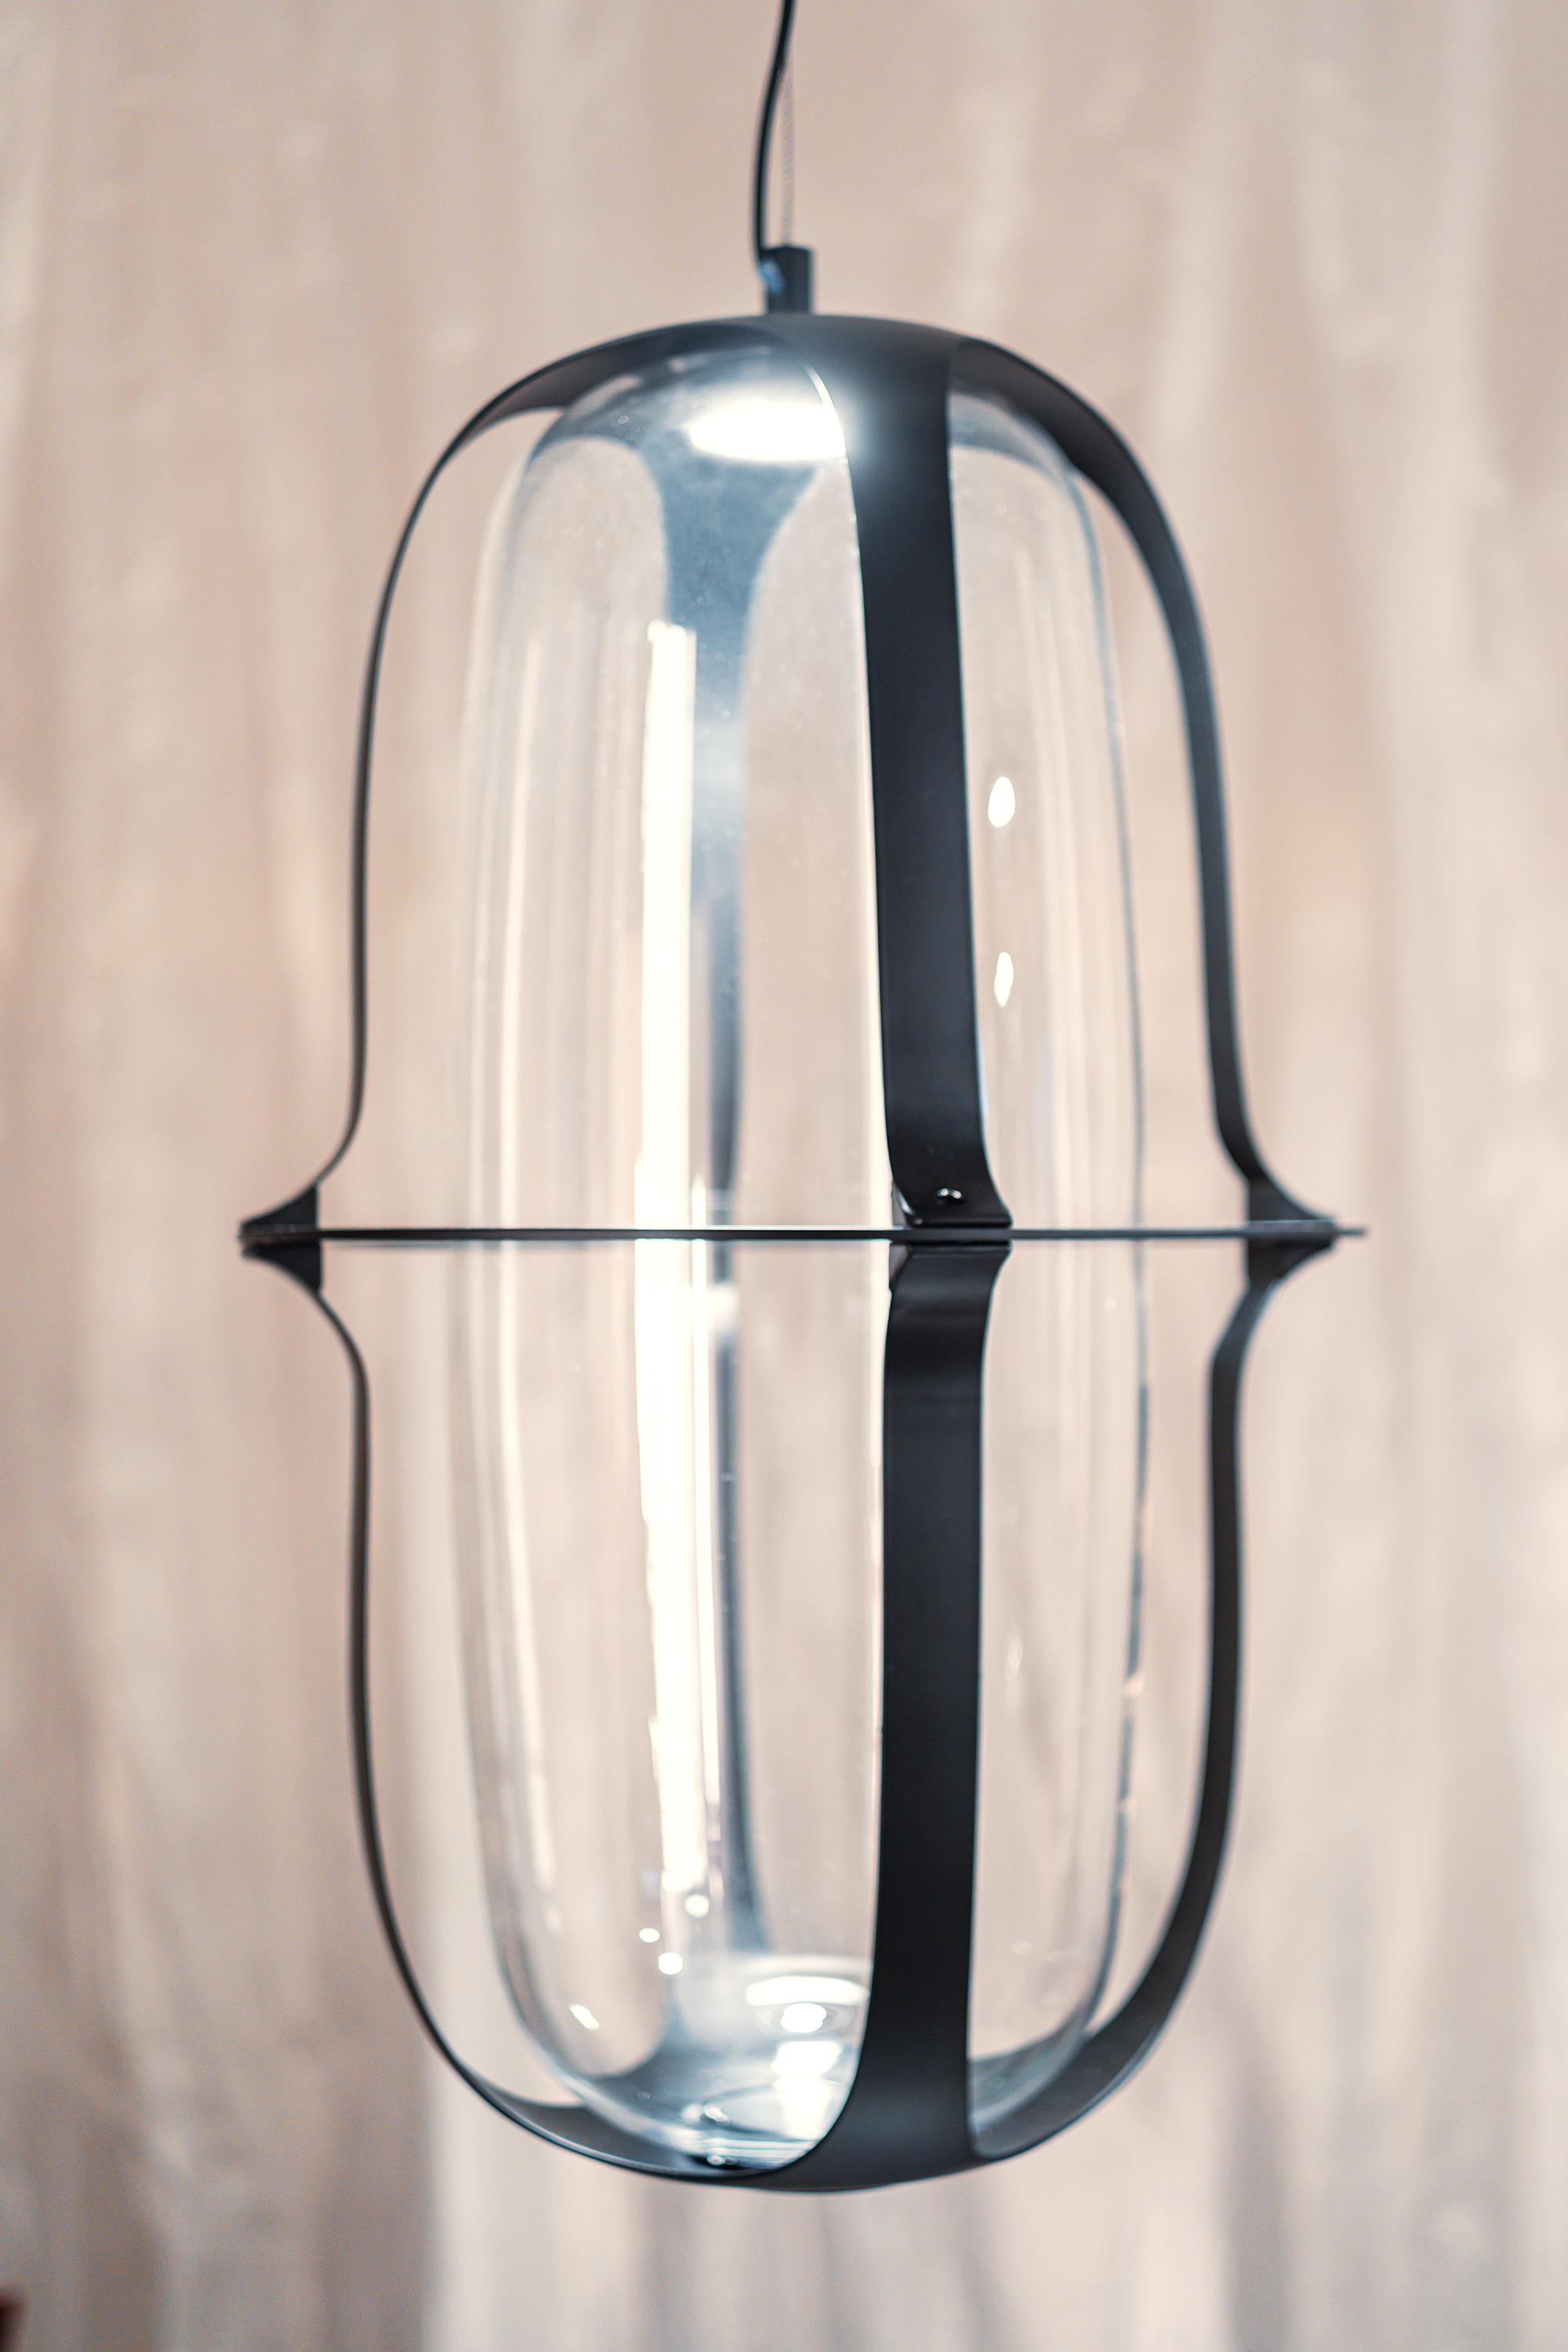 Pressed KDLN Contemporary KOOI Led Suspension Lamp  For Sale